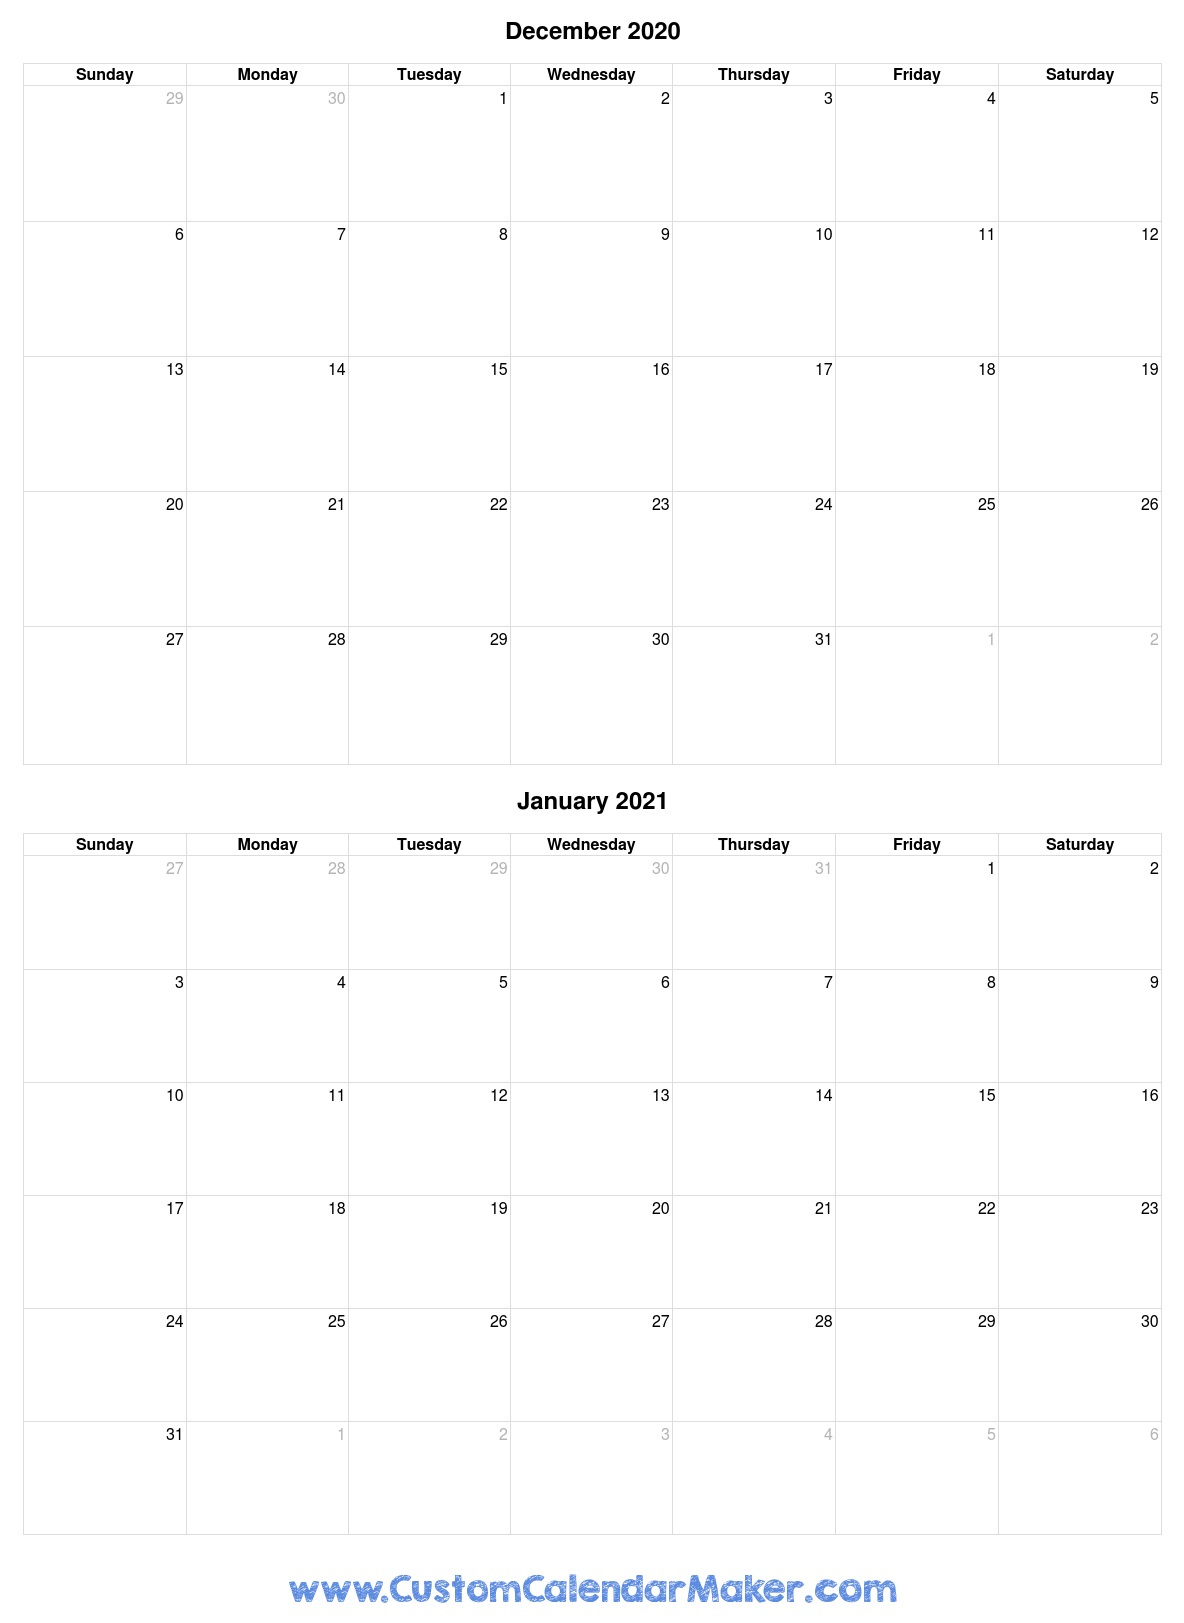 Calendar December 2020 January 2021 | Printable Calendars 2021 December 2020 To Jan 2021 Calendar